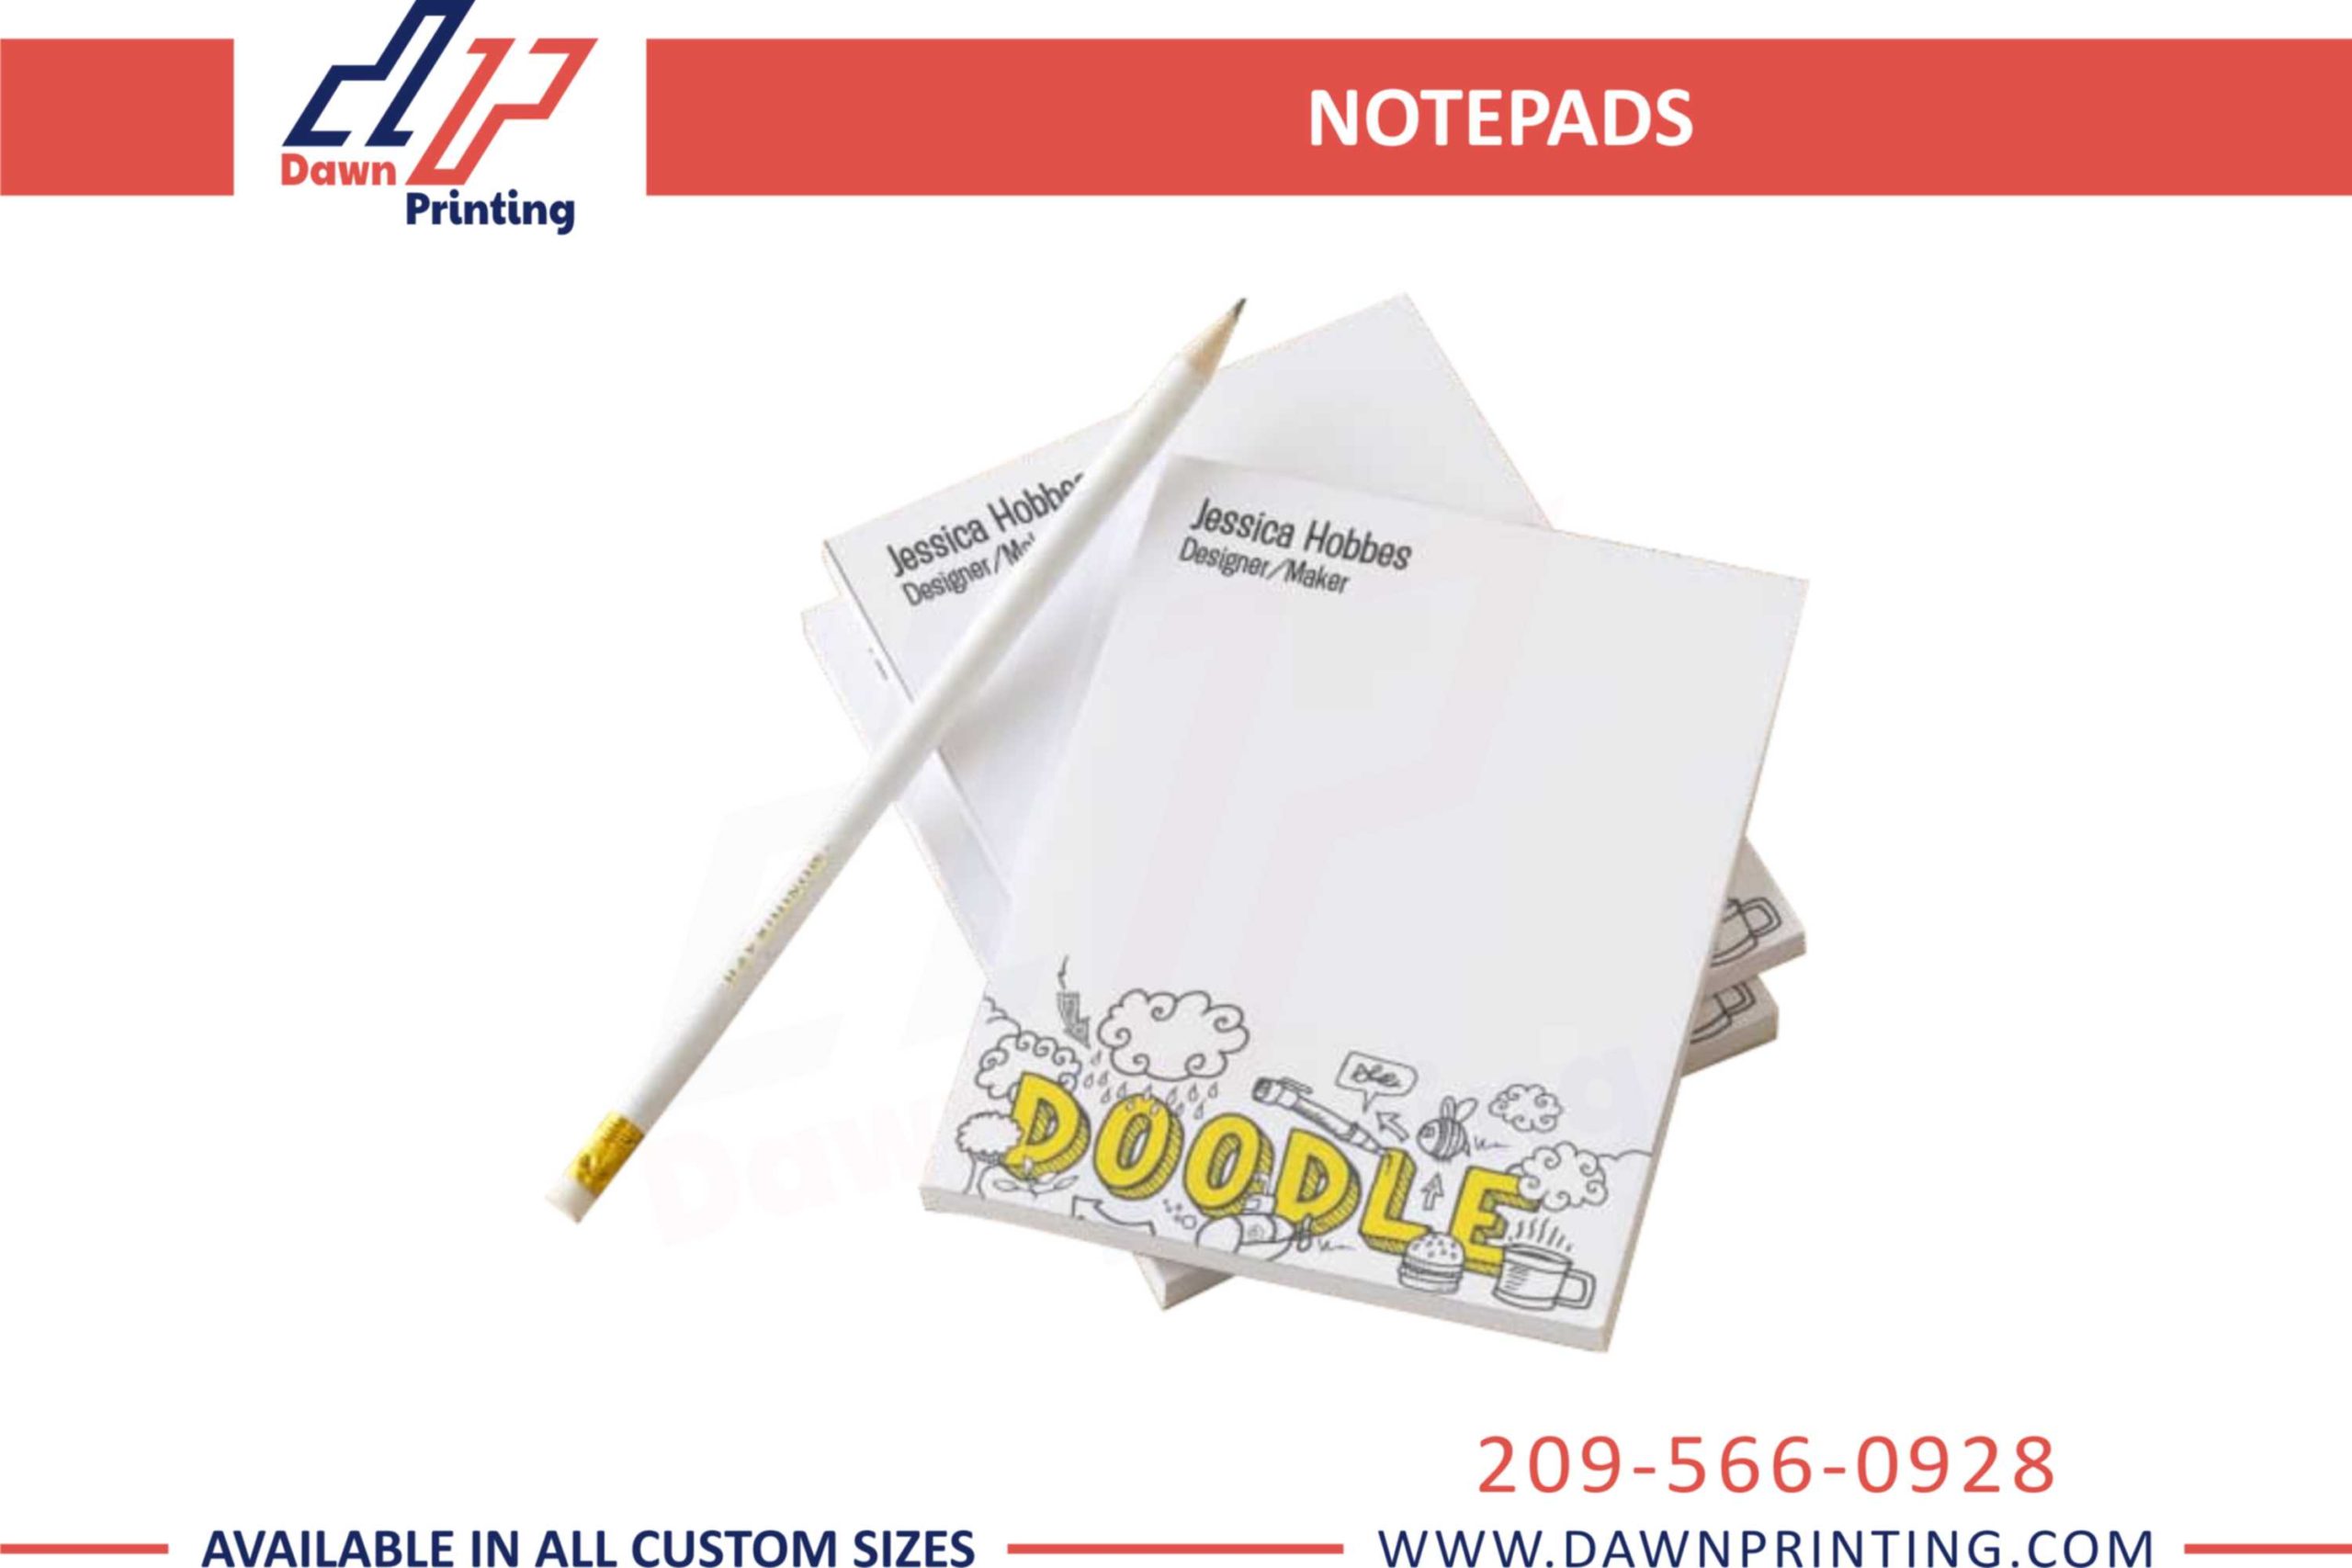 Custom Printed Notepads - Dawn Printing